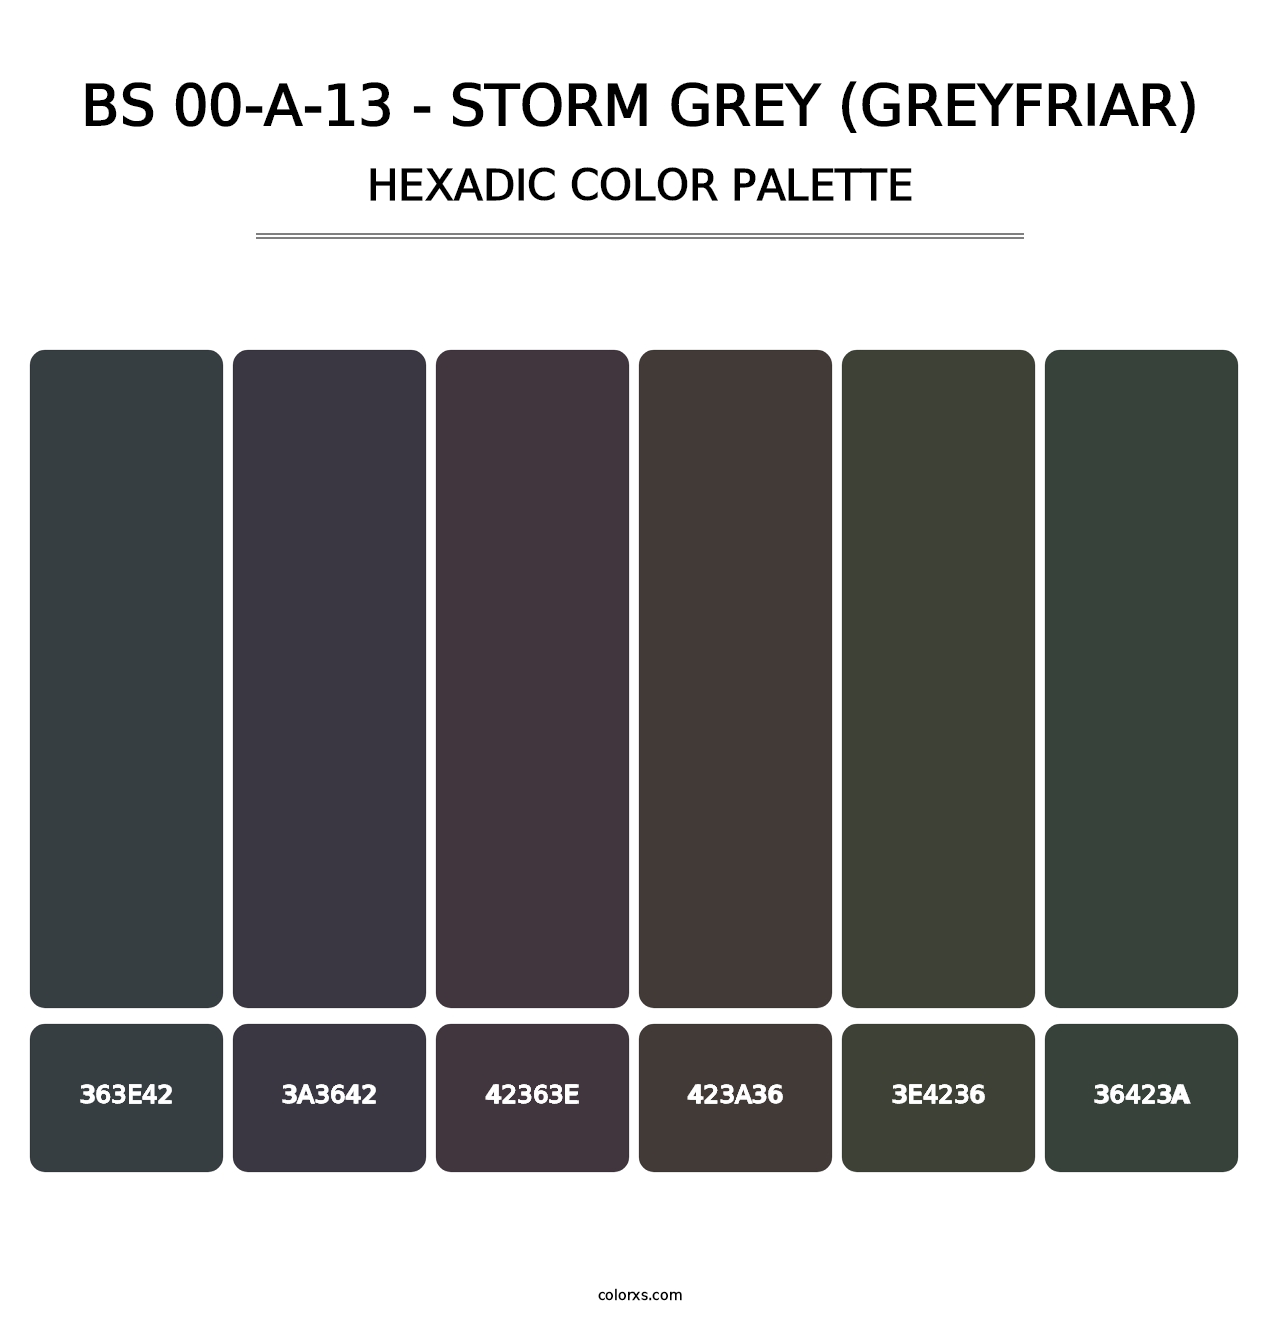 BS 00-A-13 - Storm Grey (Greyfriar) - Hexadic Color Palette